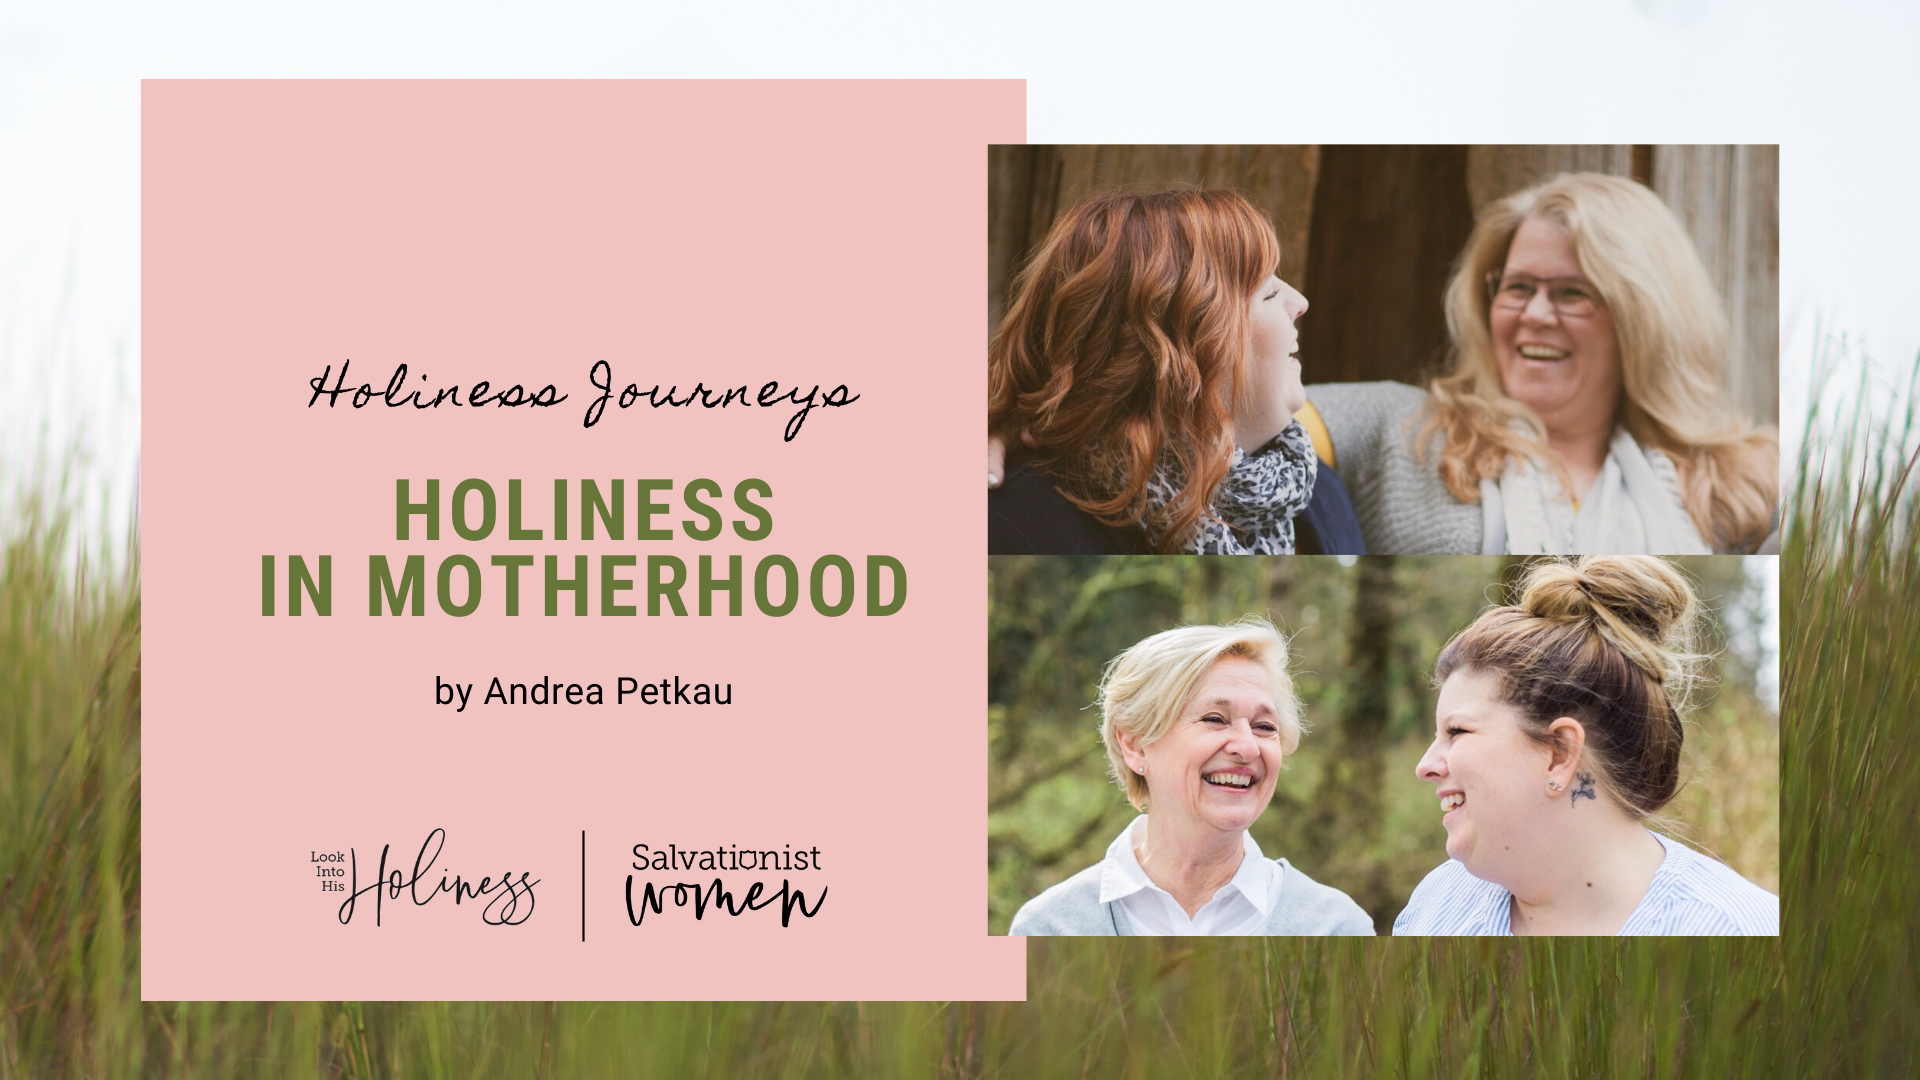 Holiness Journeys - Holiness In Motherhood